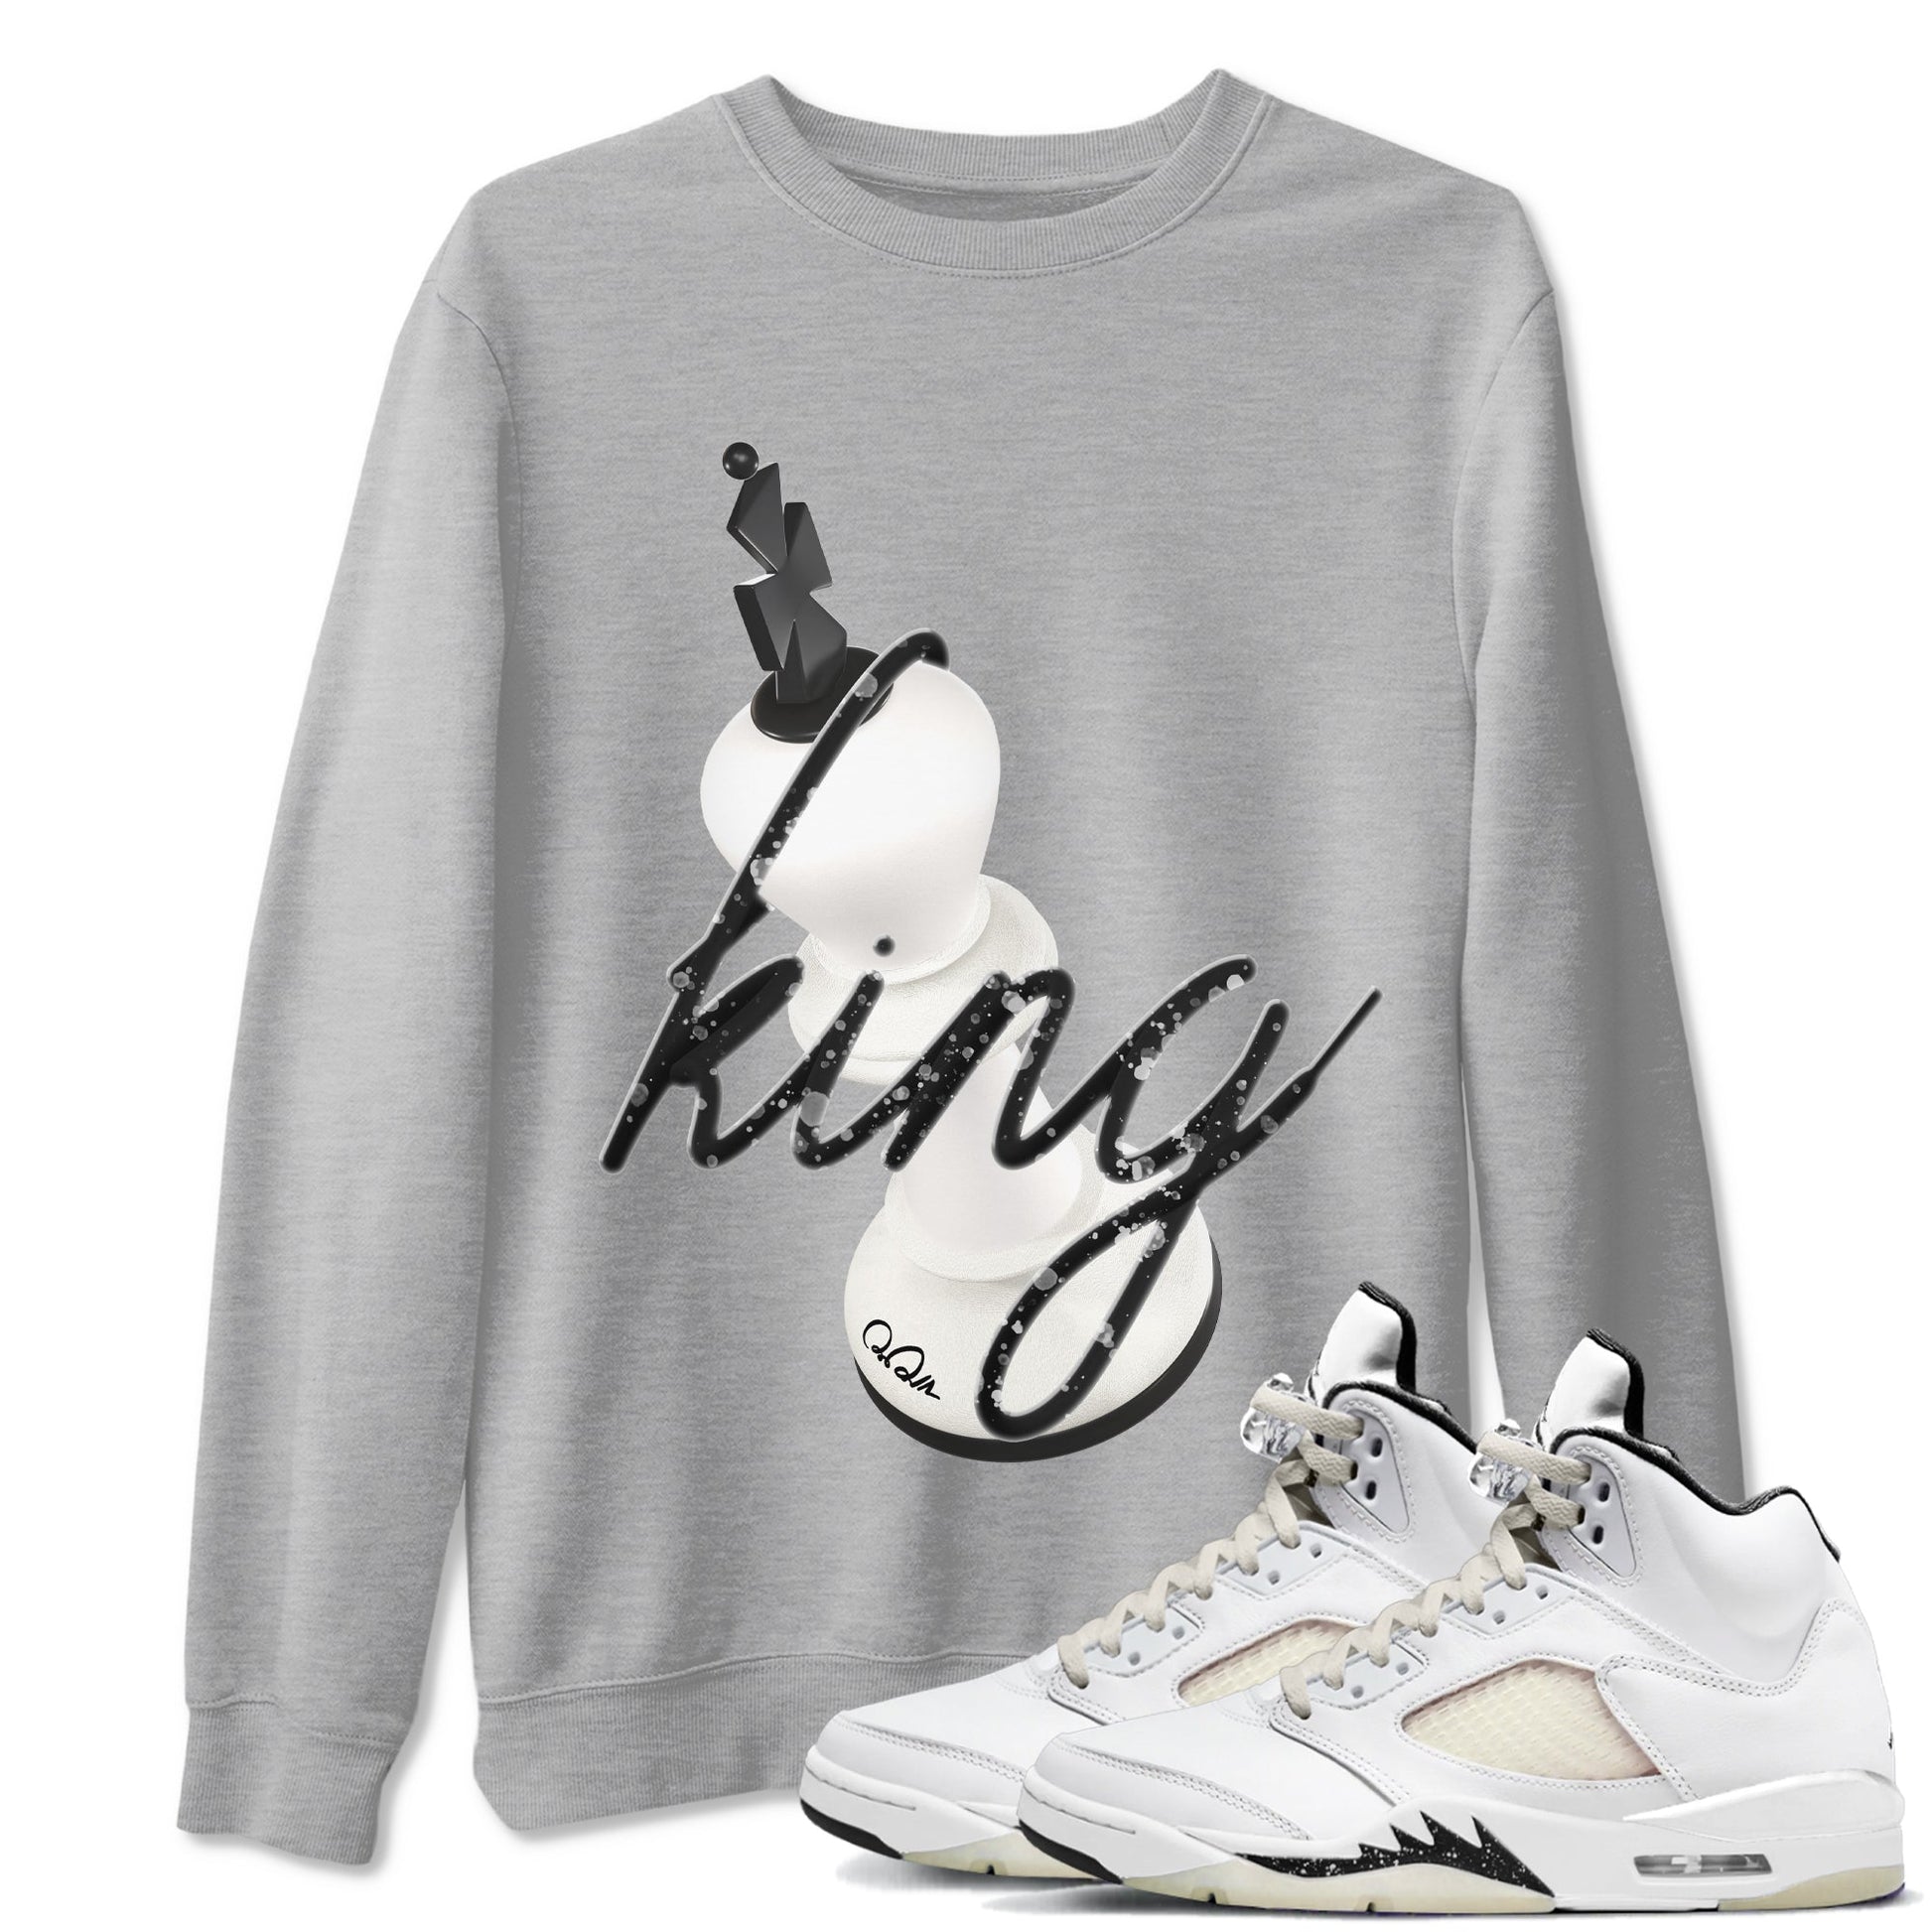 5s Sail shirt to match jordans 3D King sneaker tees Air Jordan 5 Sail SNRT Sneaker Release Tees unisex cotton Heather Grey 1 crew neck shirt